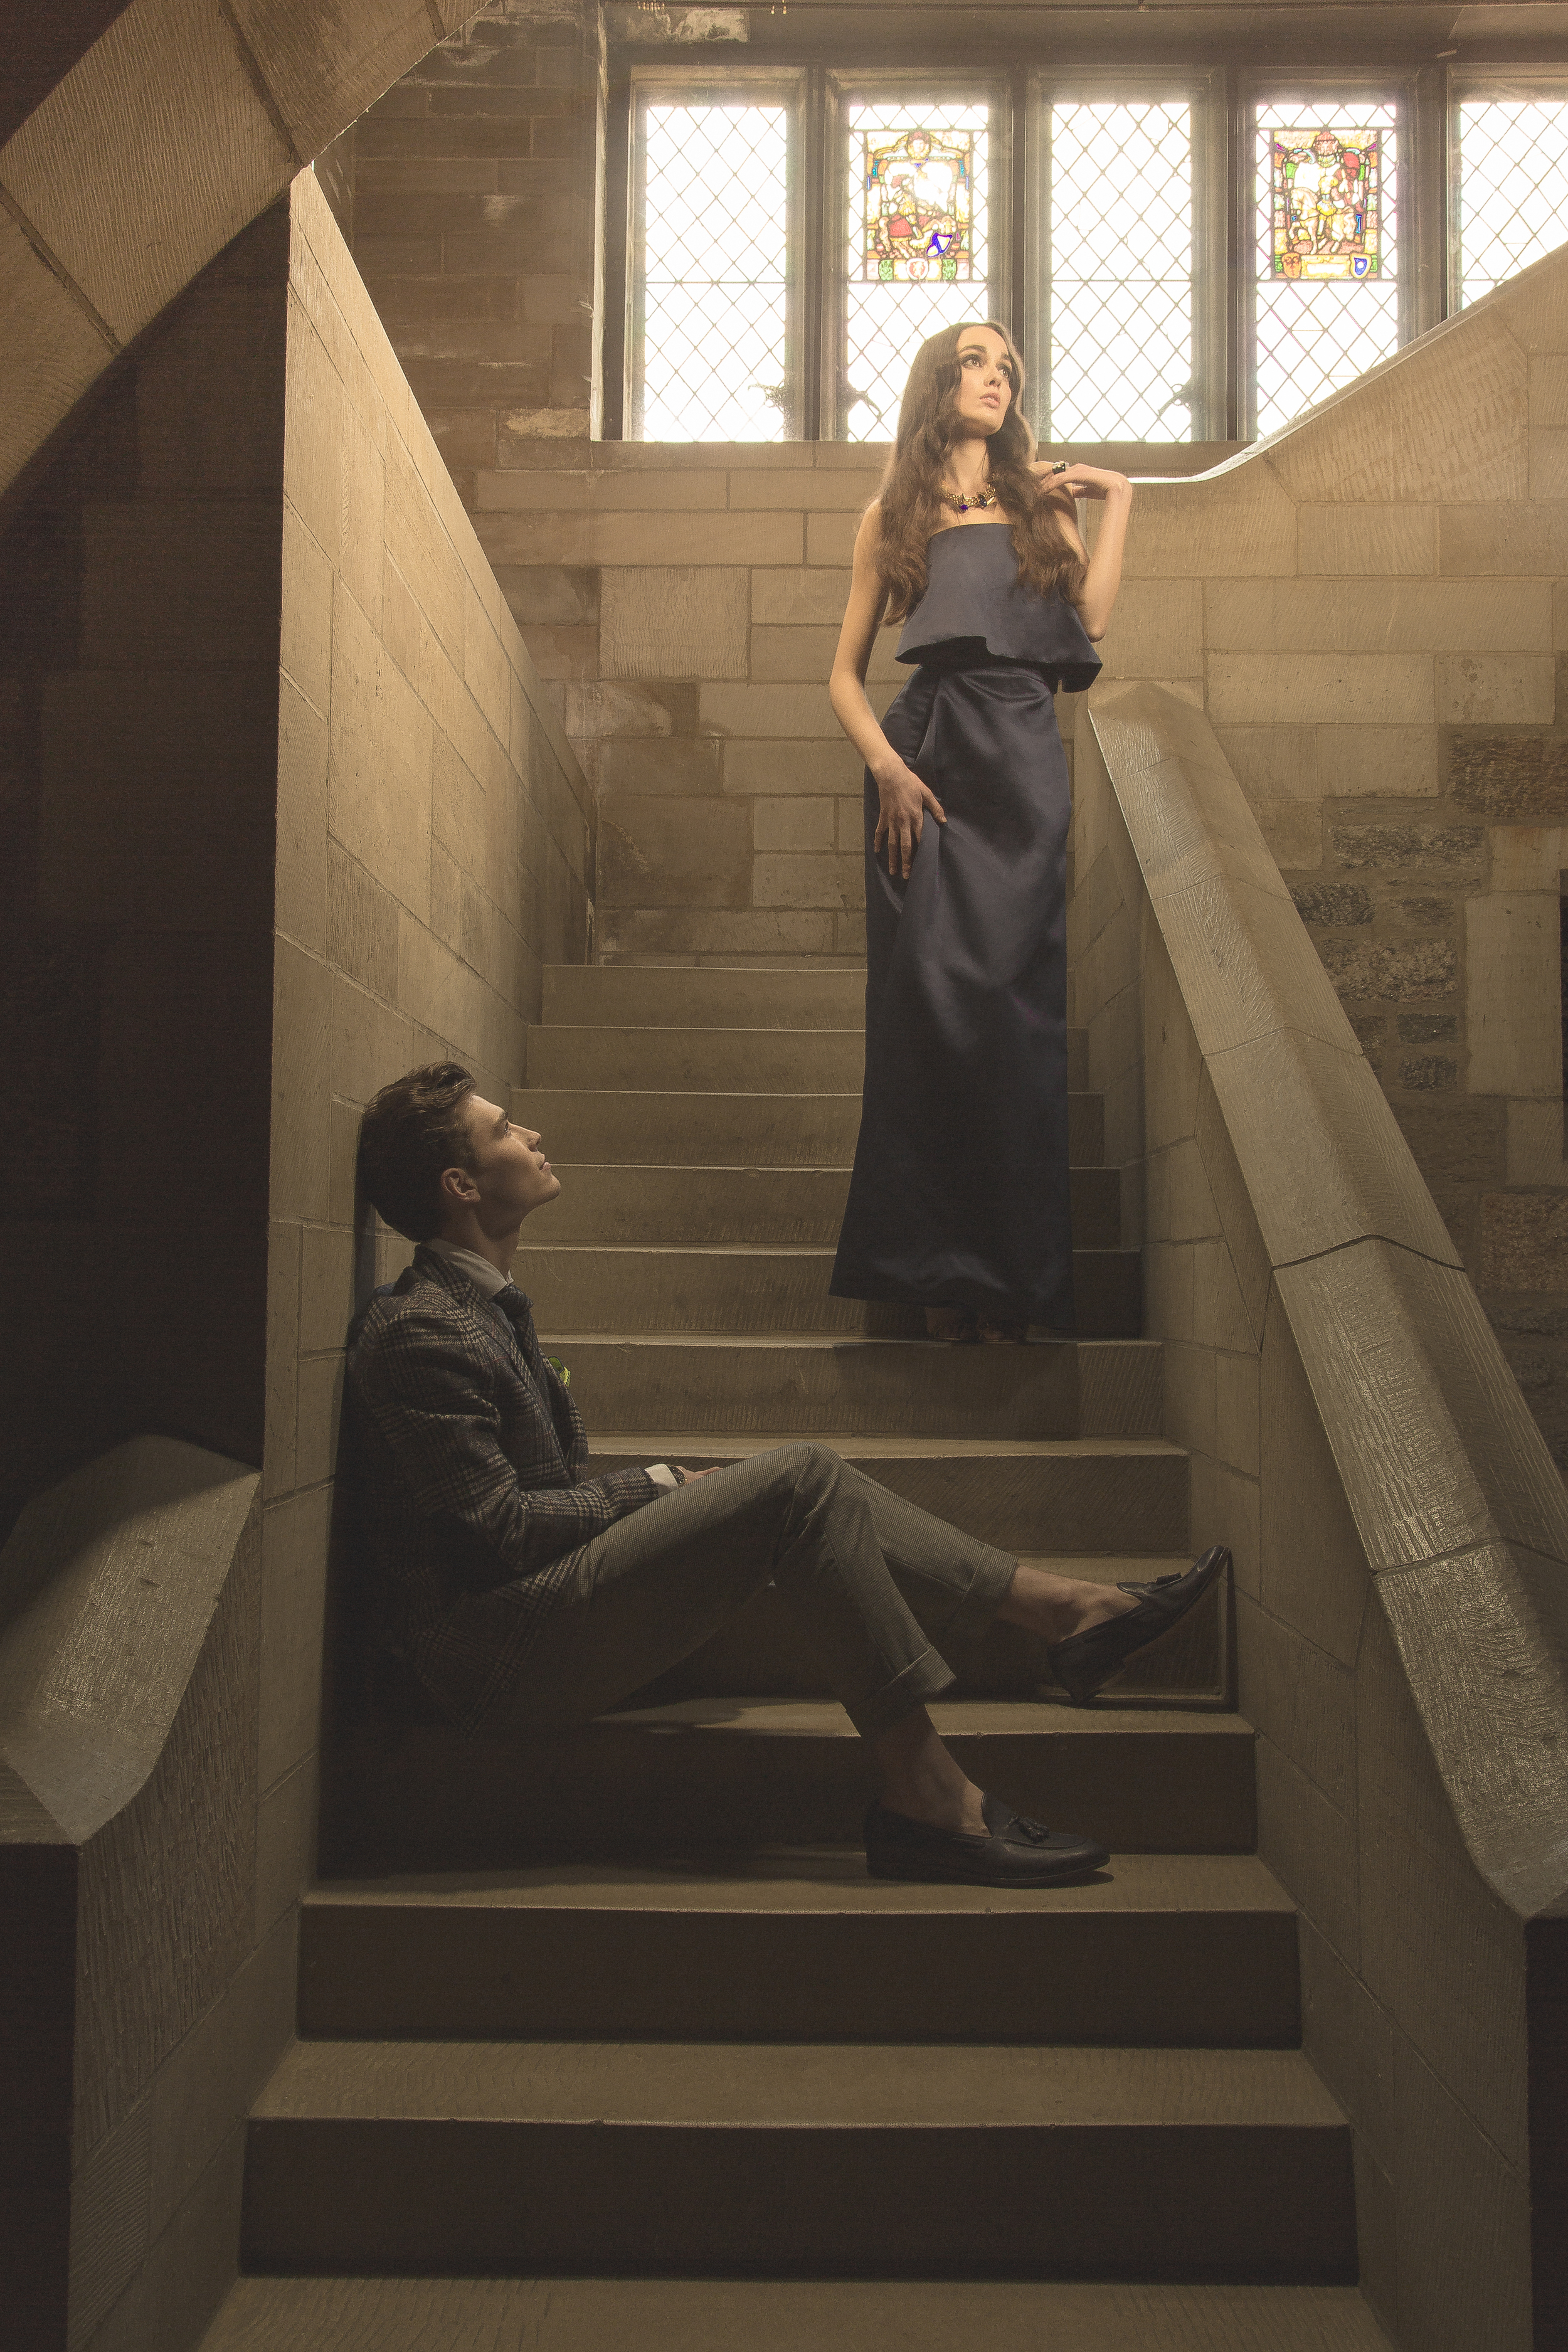 Fashion-NY-Couple-Stairs-Eric Auffhammer-.jpg